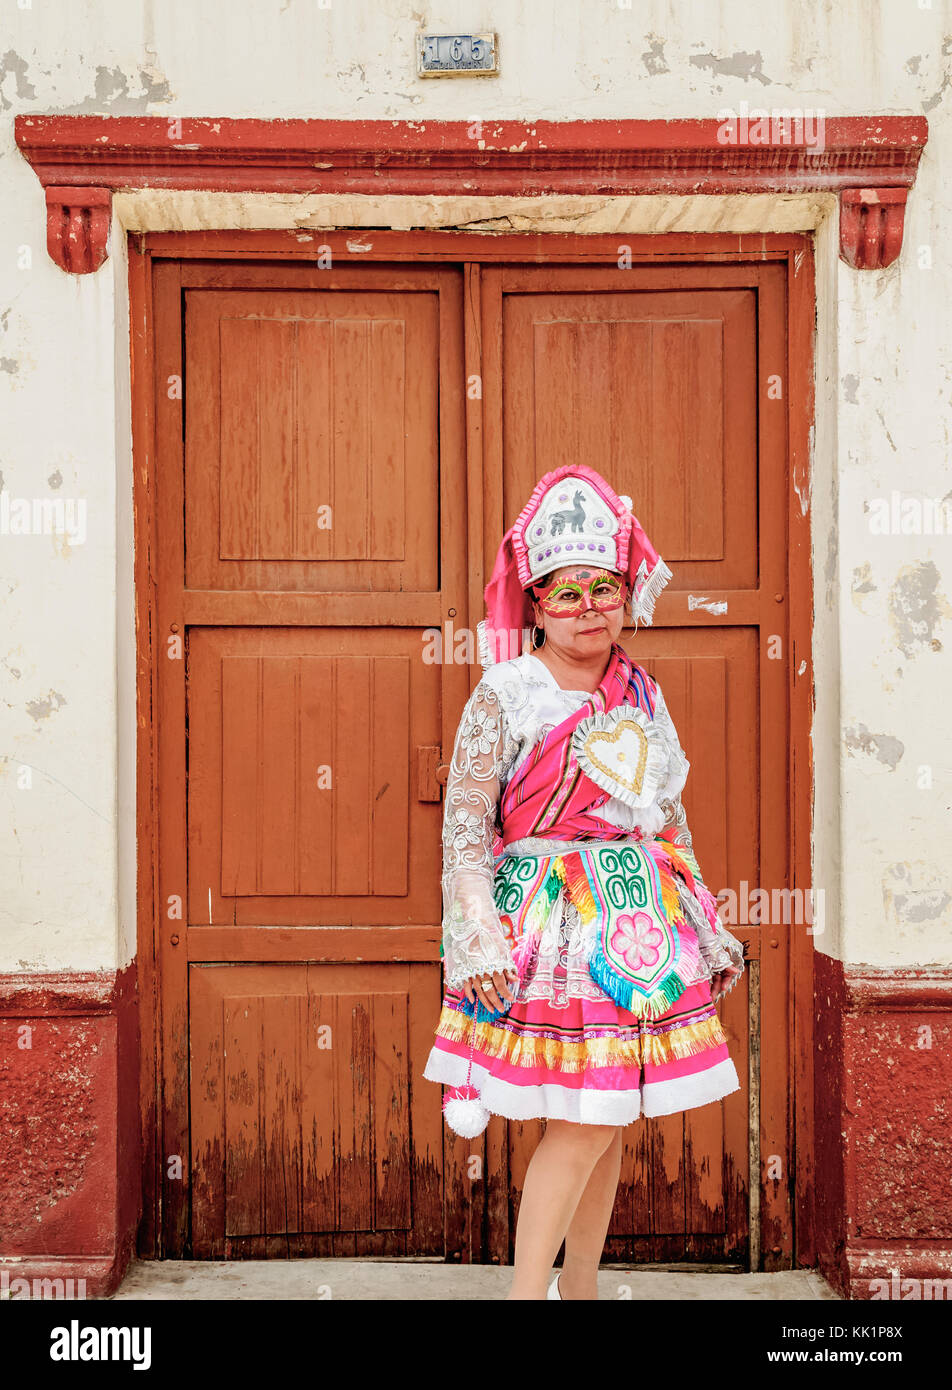 Lady in traditional clothing, Fiesta de la Candelaria, Puno, Peru Stock Photo Alamy